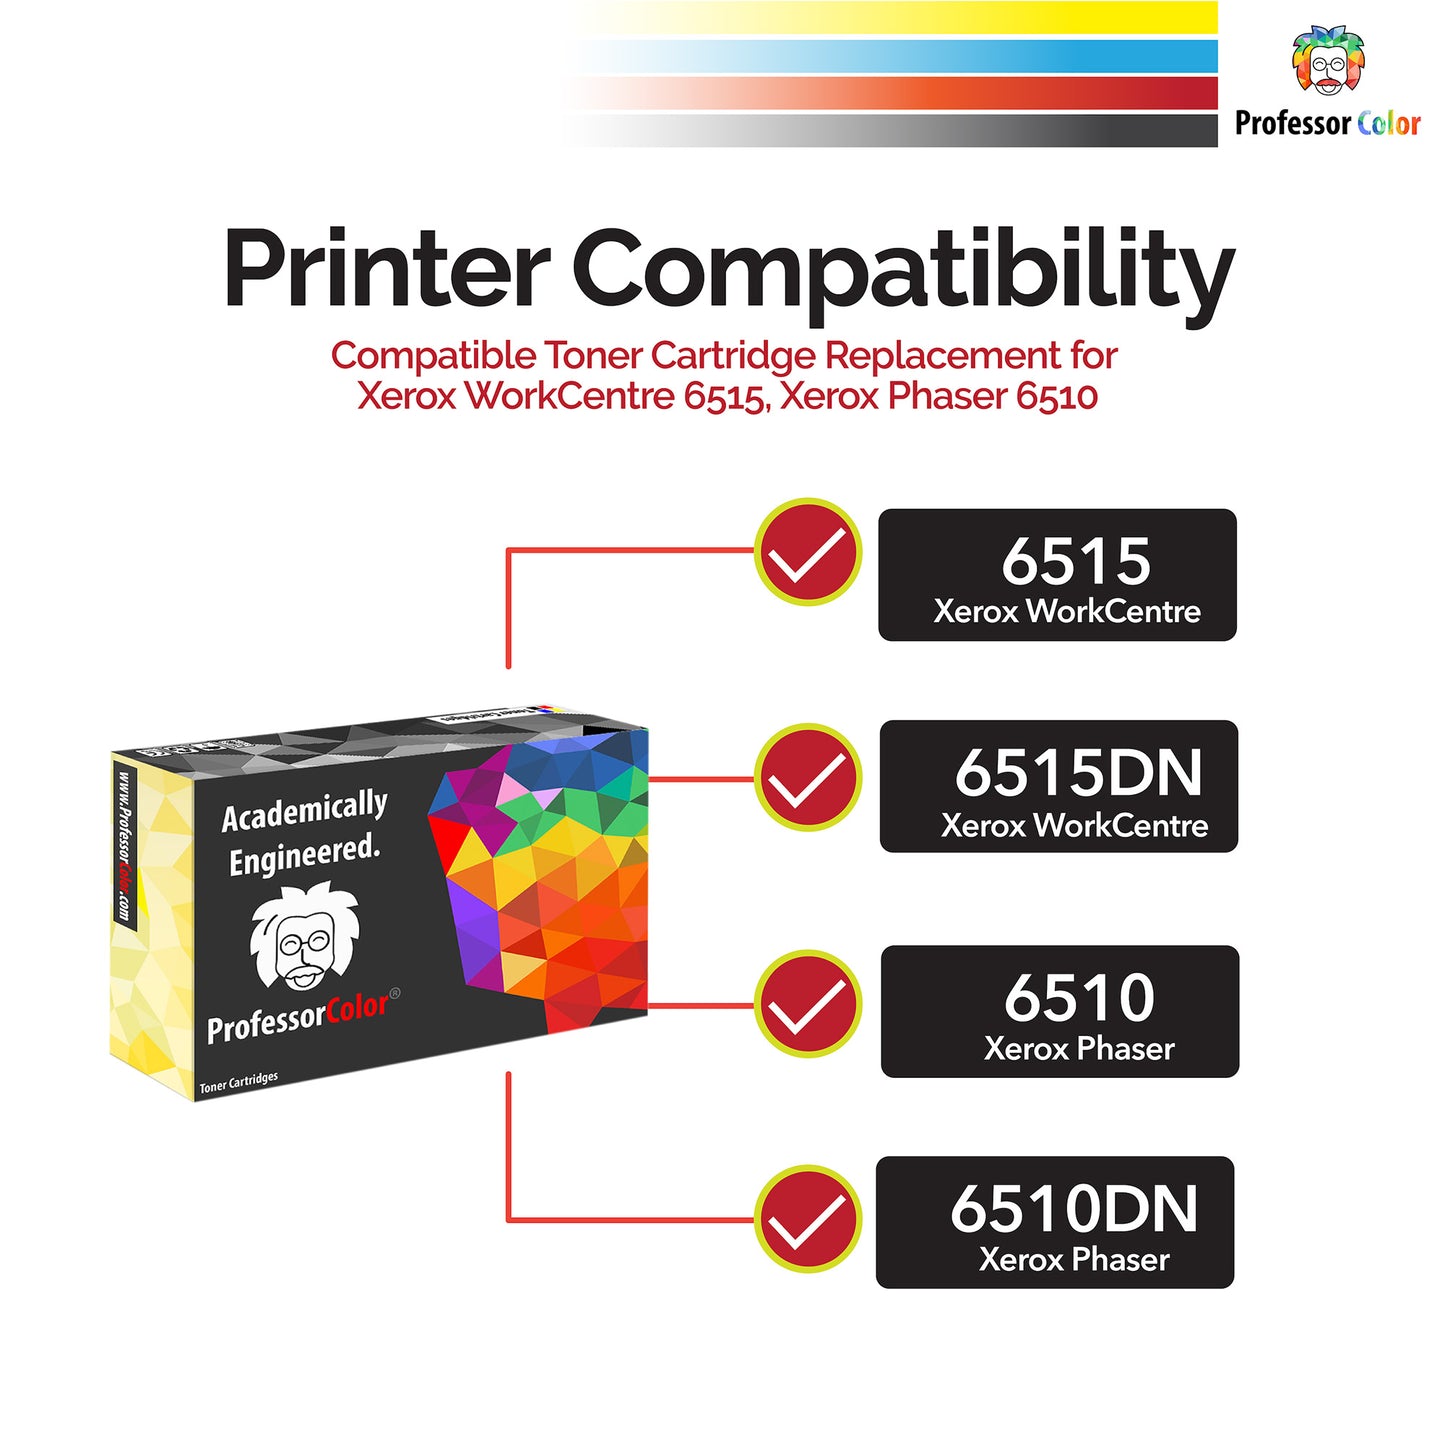 Professor Color High Capacity Compatible Toner Cartridge Replacement Set for Phaser 6510 & Workcentre 6515 - Professor Color